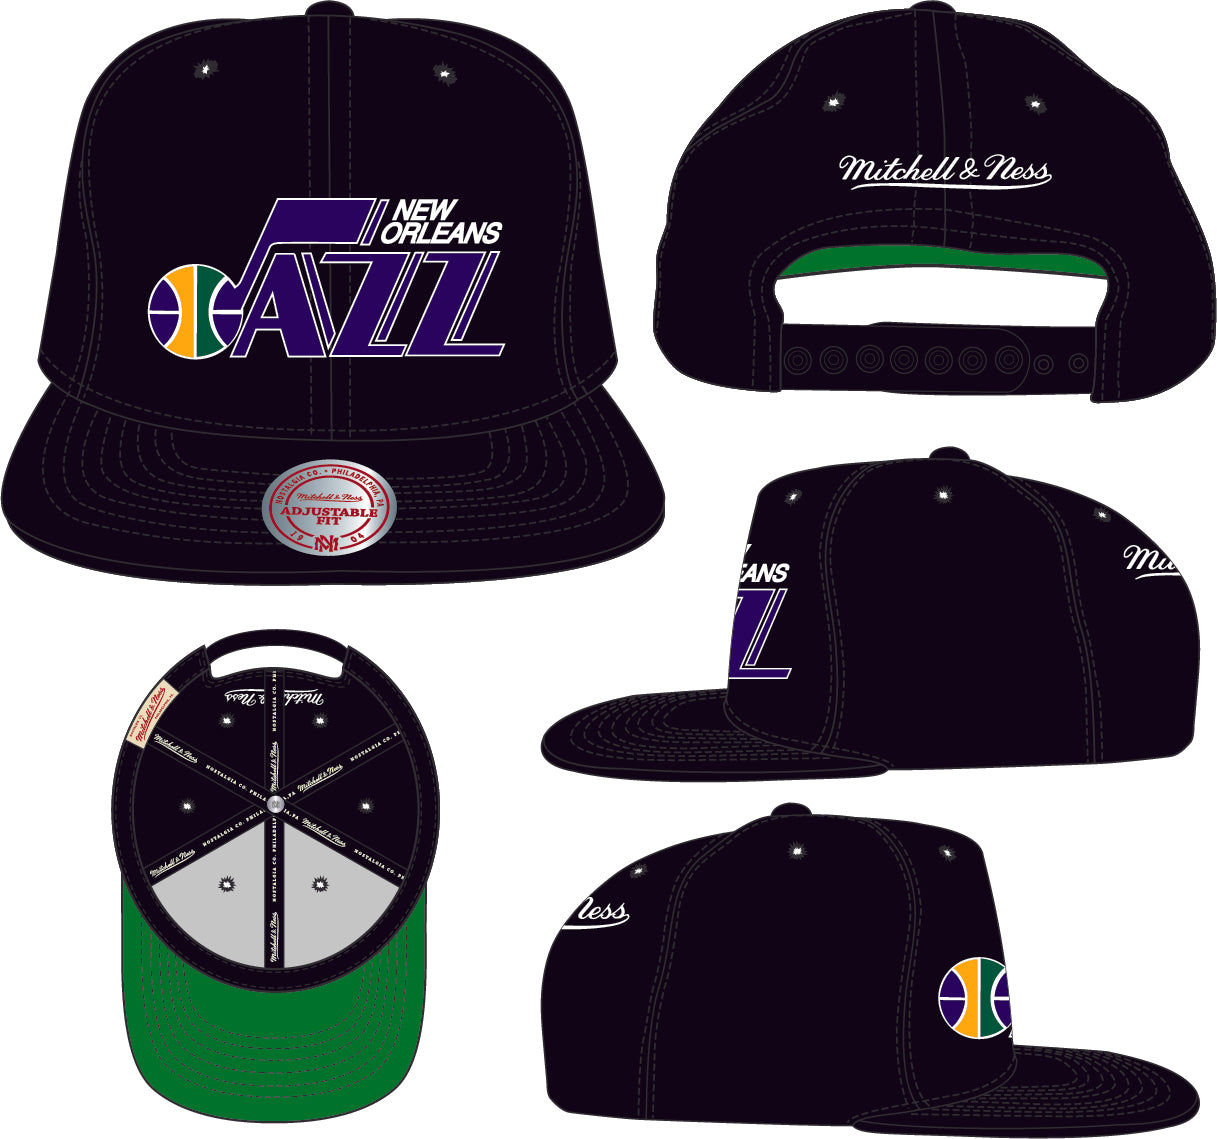 Men's Mitchell & Ness New Orleans Jazz NBA Core BasicBlack Snapback Hat